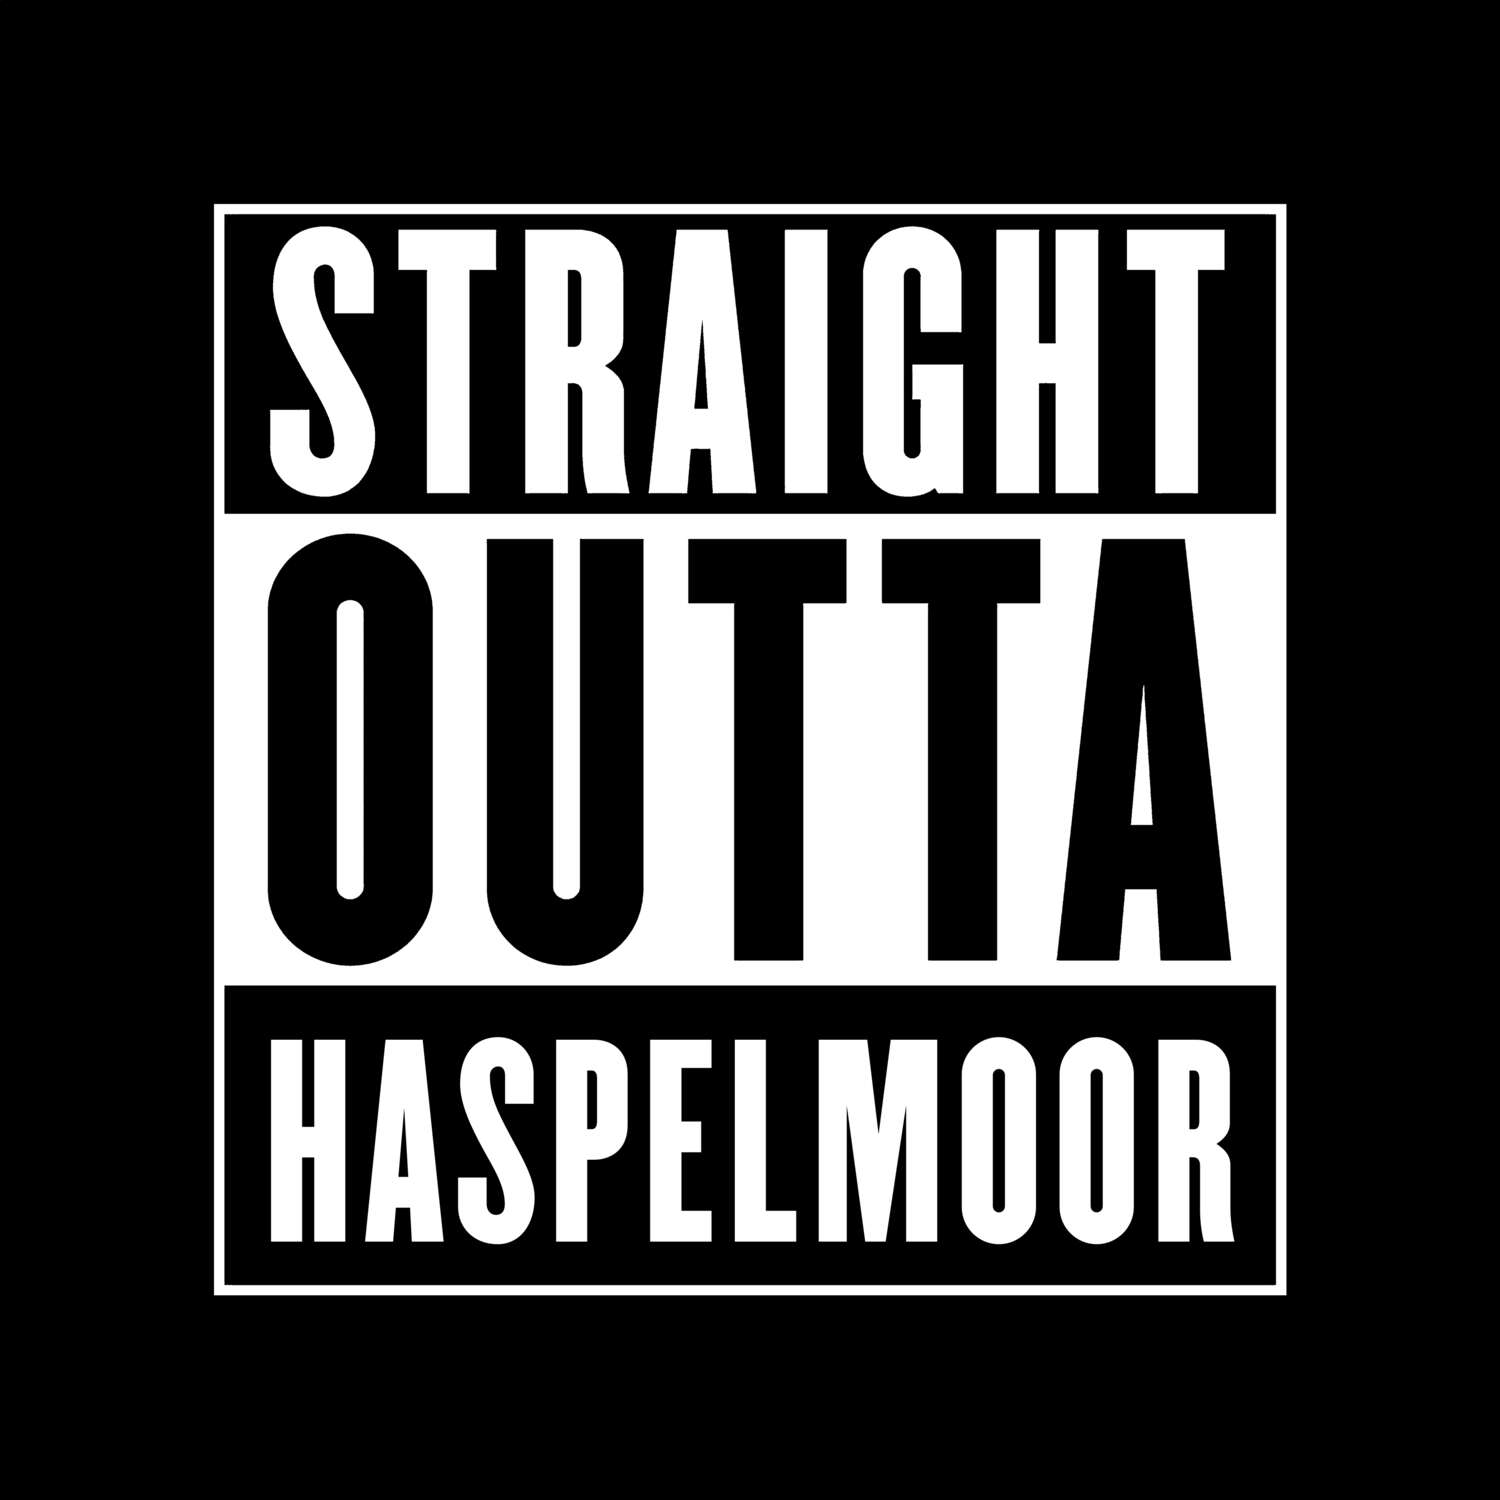 Haspelmoor T-Shirt »Straight Outta«